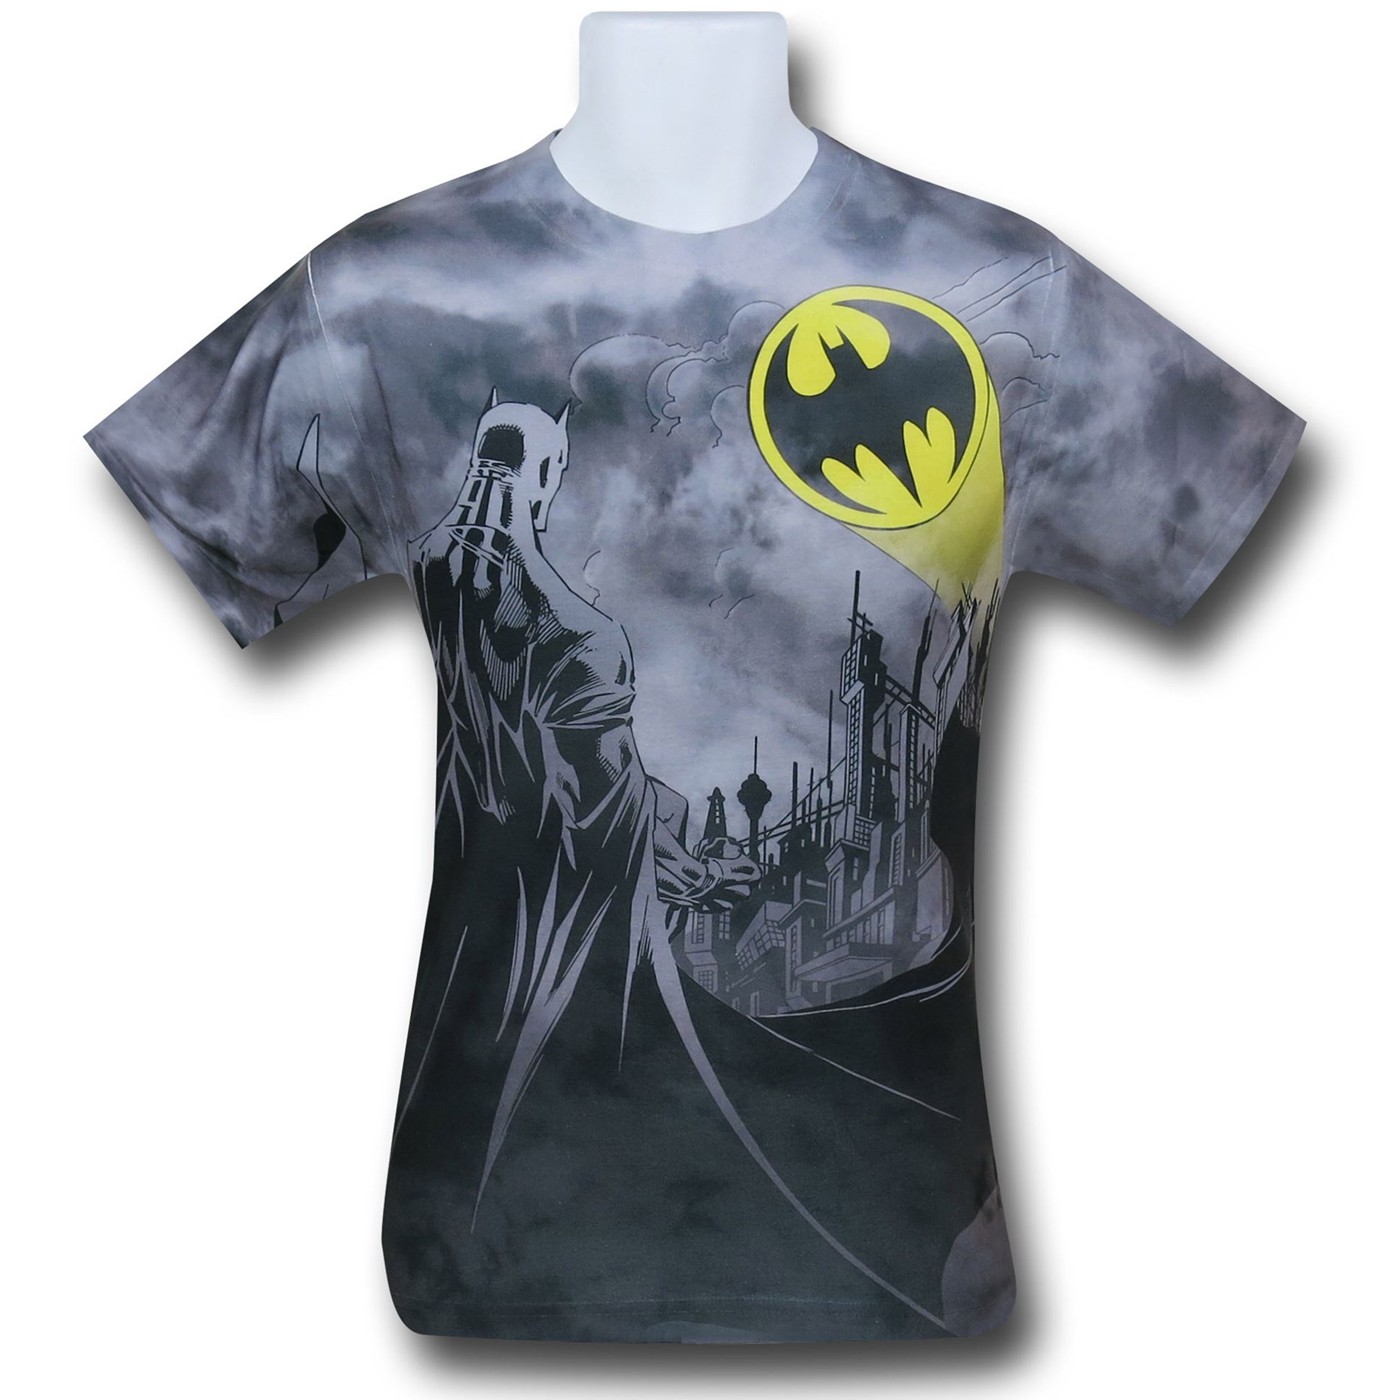 Batman Heed the Call Sublimated T-Shirt